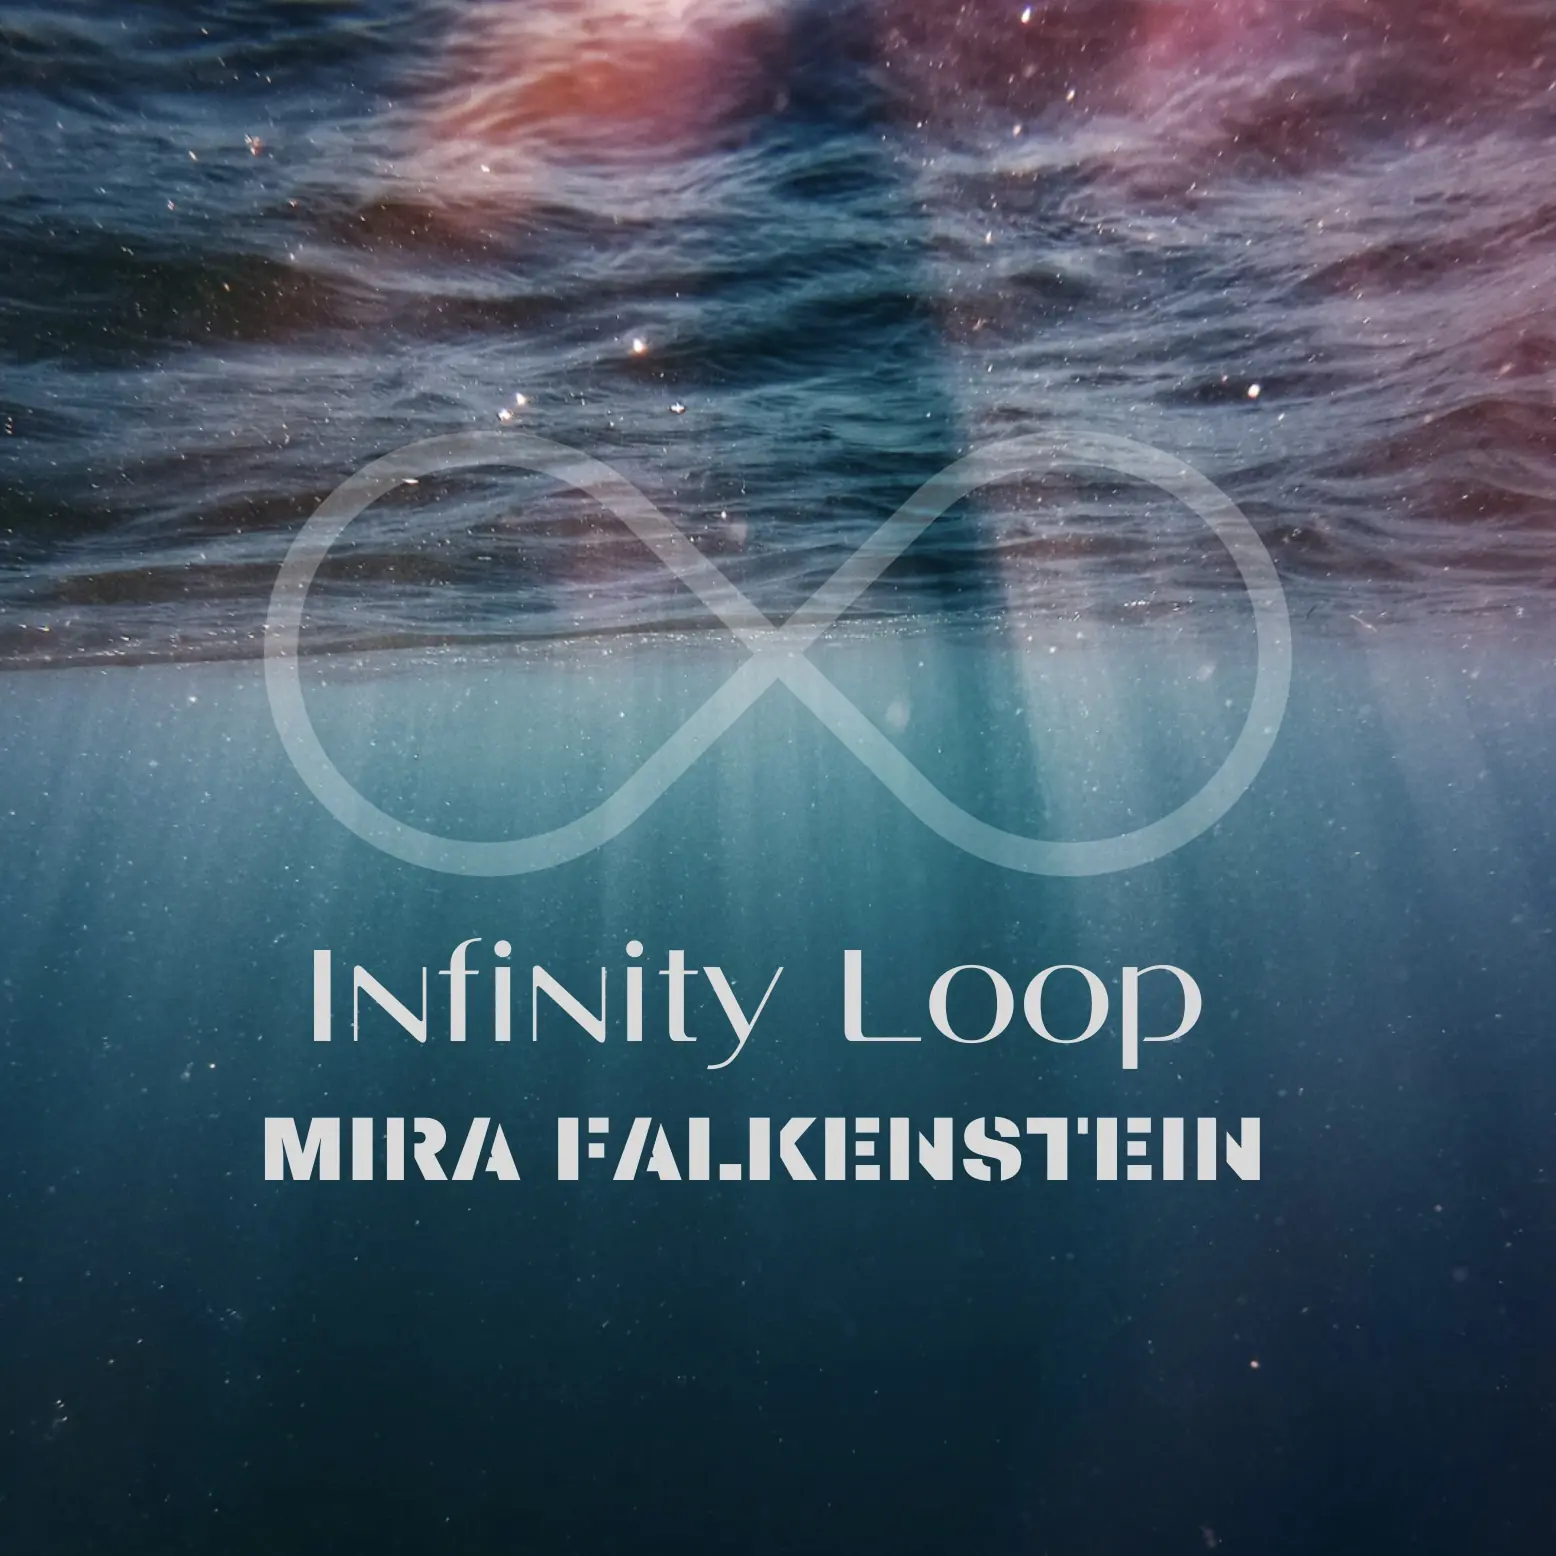 NEW SONG RELEASE ‚INFINITY LOOP‘ BY MIRA FALKENSTEIN